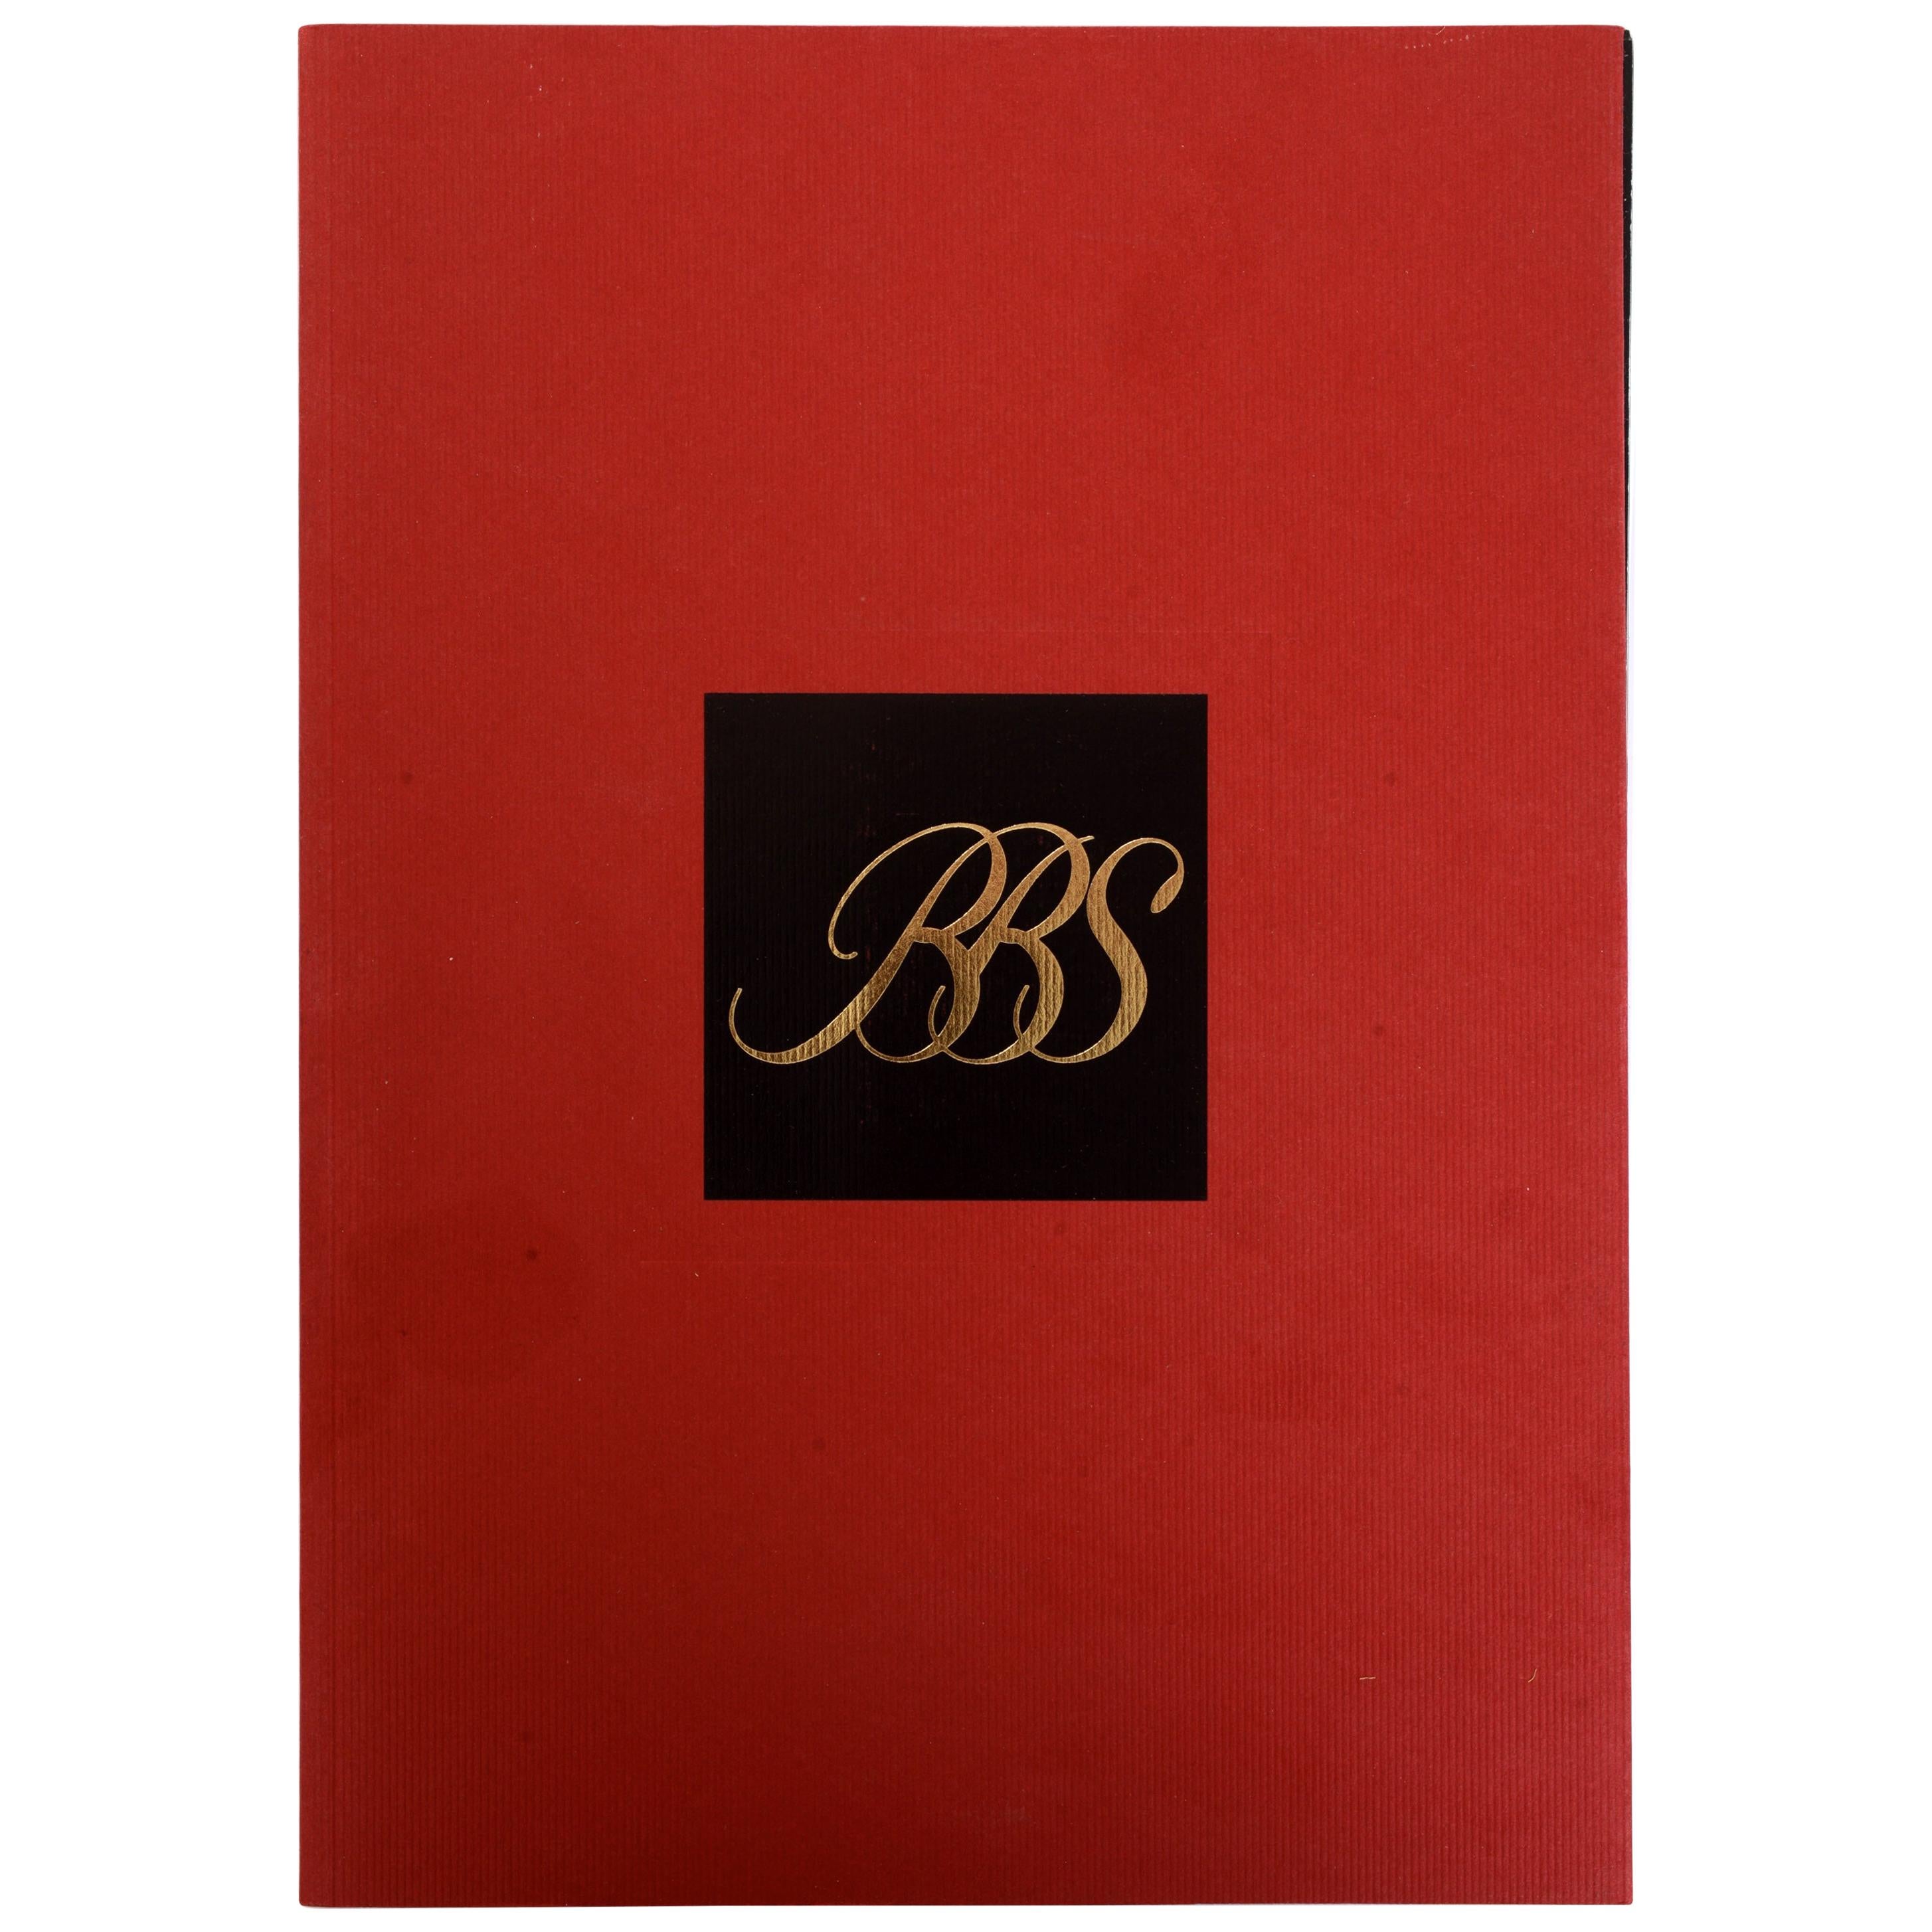 Bernard & Benjamin Steinitz, Antiquaires a Paris, Catalogue, 1st Ed